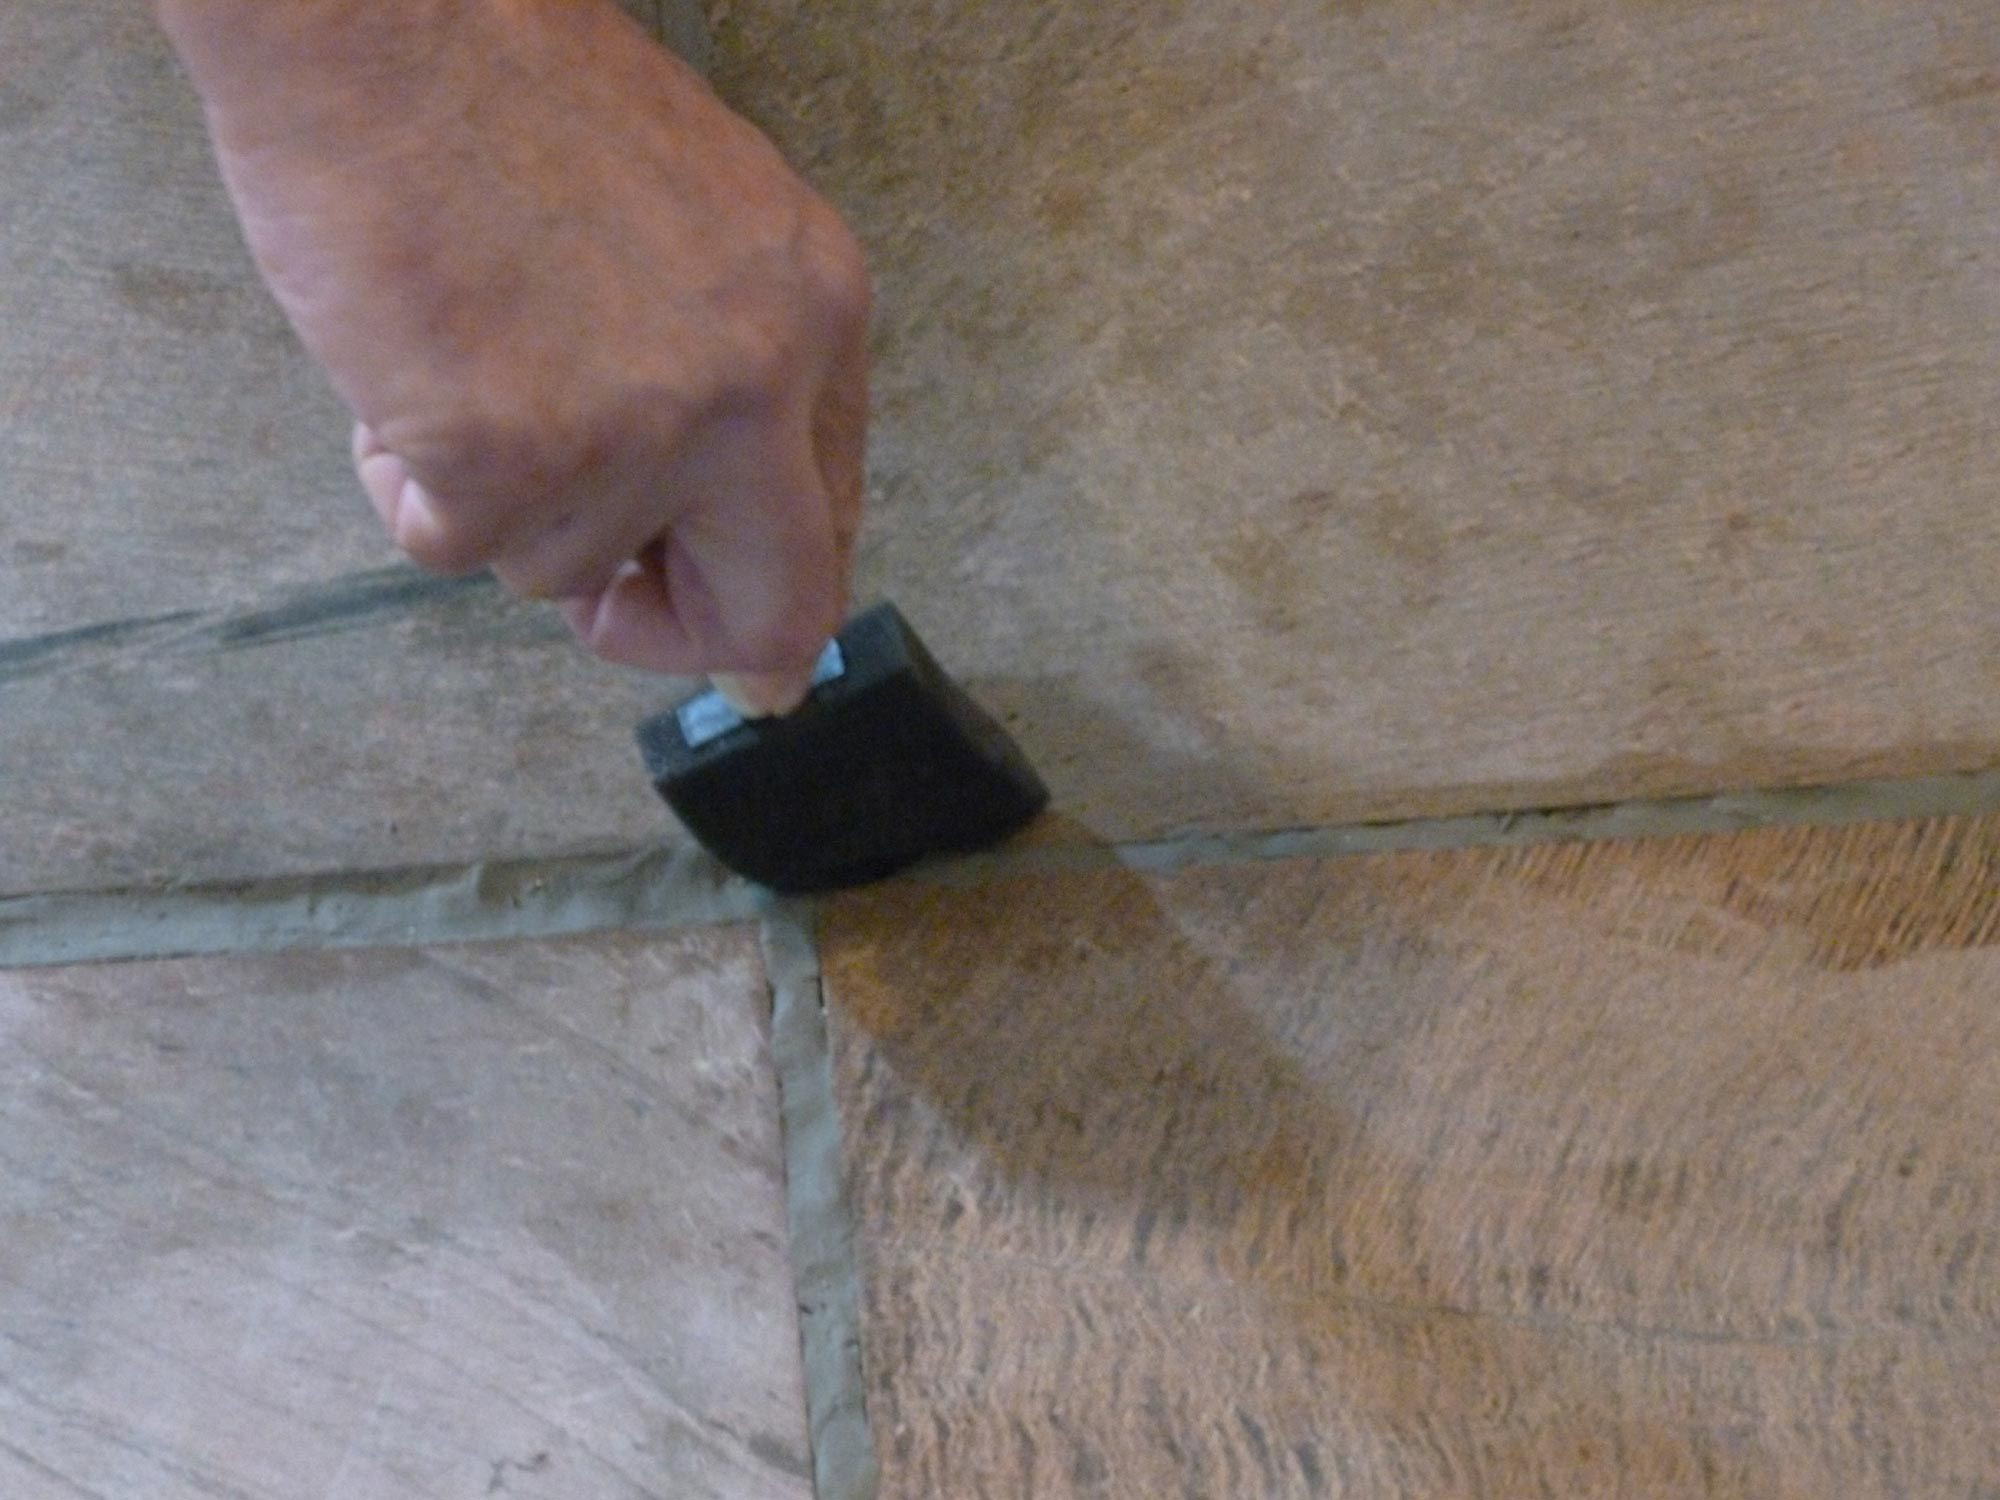 graphite hardwood flooring mallet of installing slate tile regarding sealing slate grout lines 1 56a2fdef5f9b58b7d0d0025c